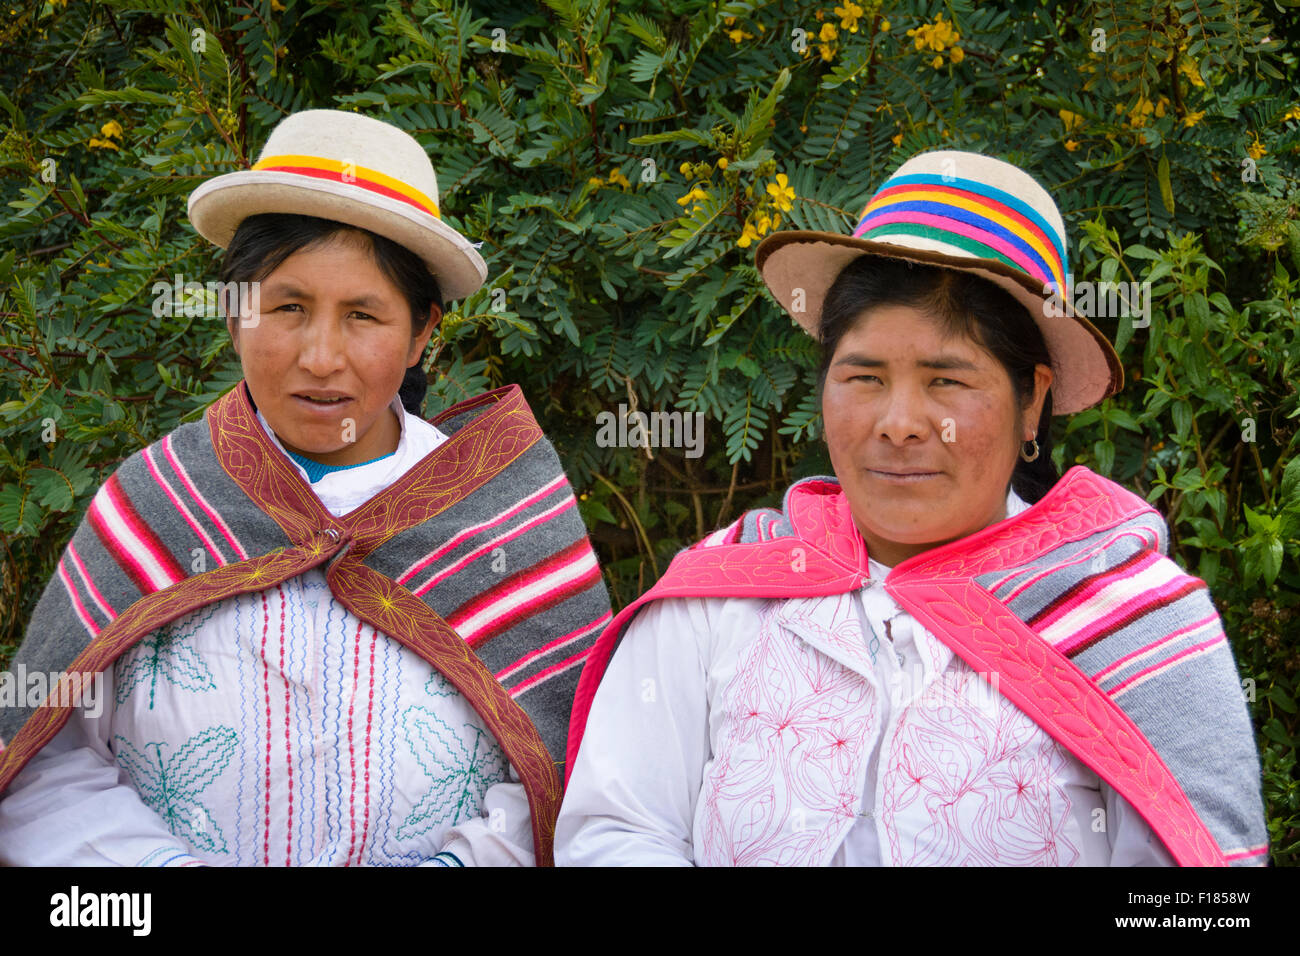 quechua clothes